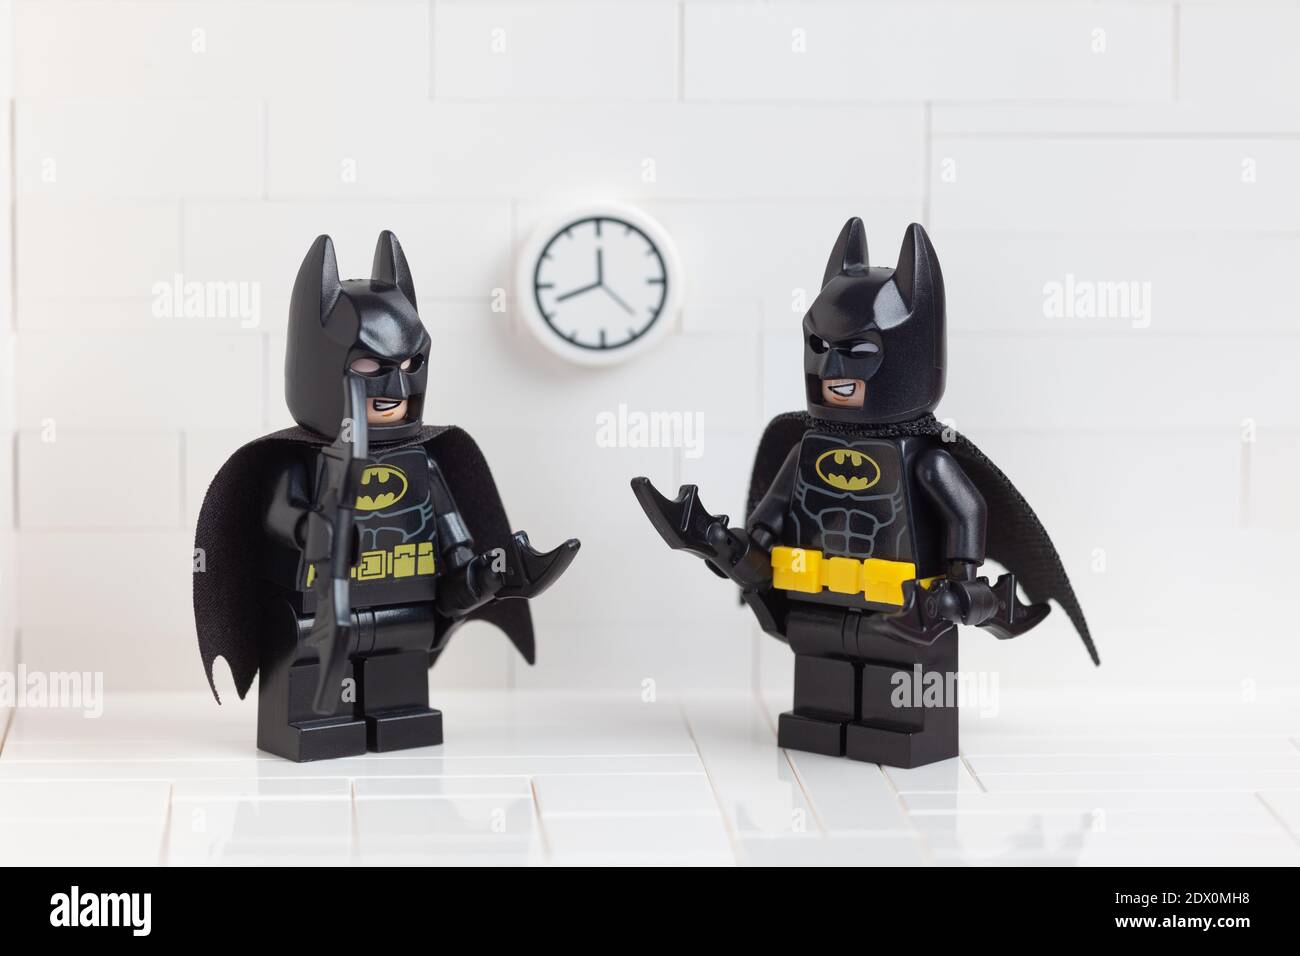 HOW TO Build a Better LEGO 1989 Batman Minifigure! 